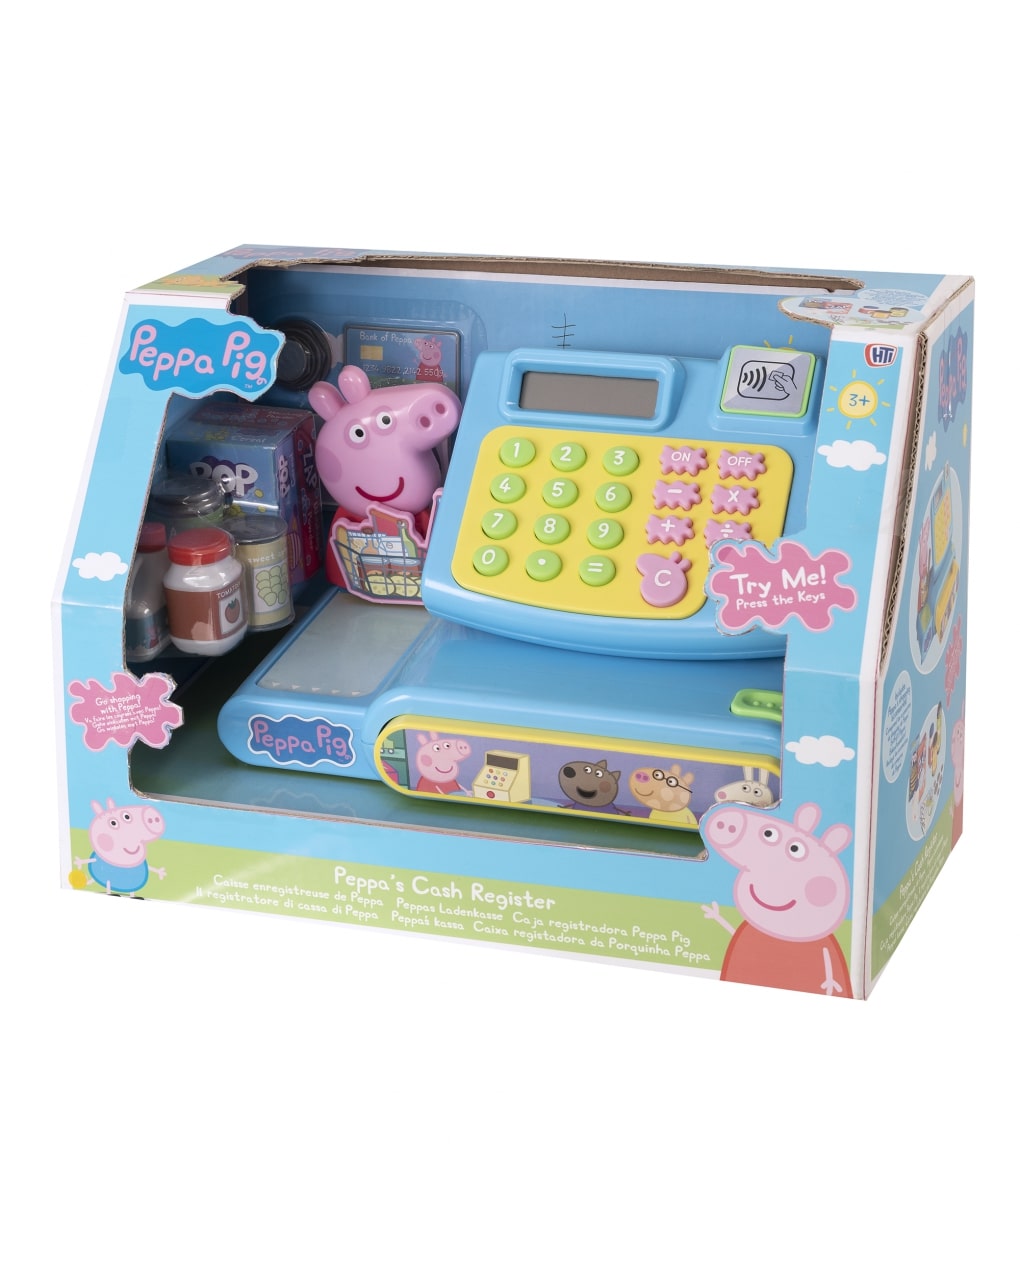 Peppa pig - caja registradora peppa pig - Peppa Pig